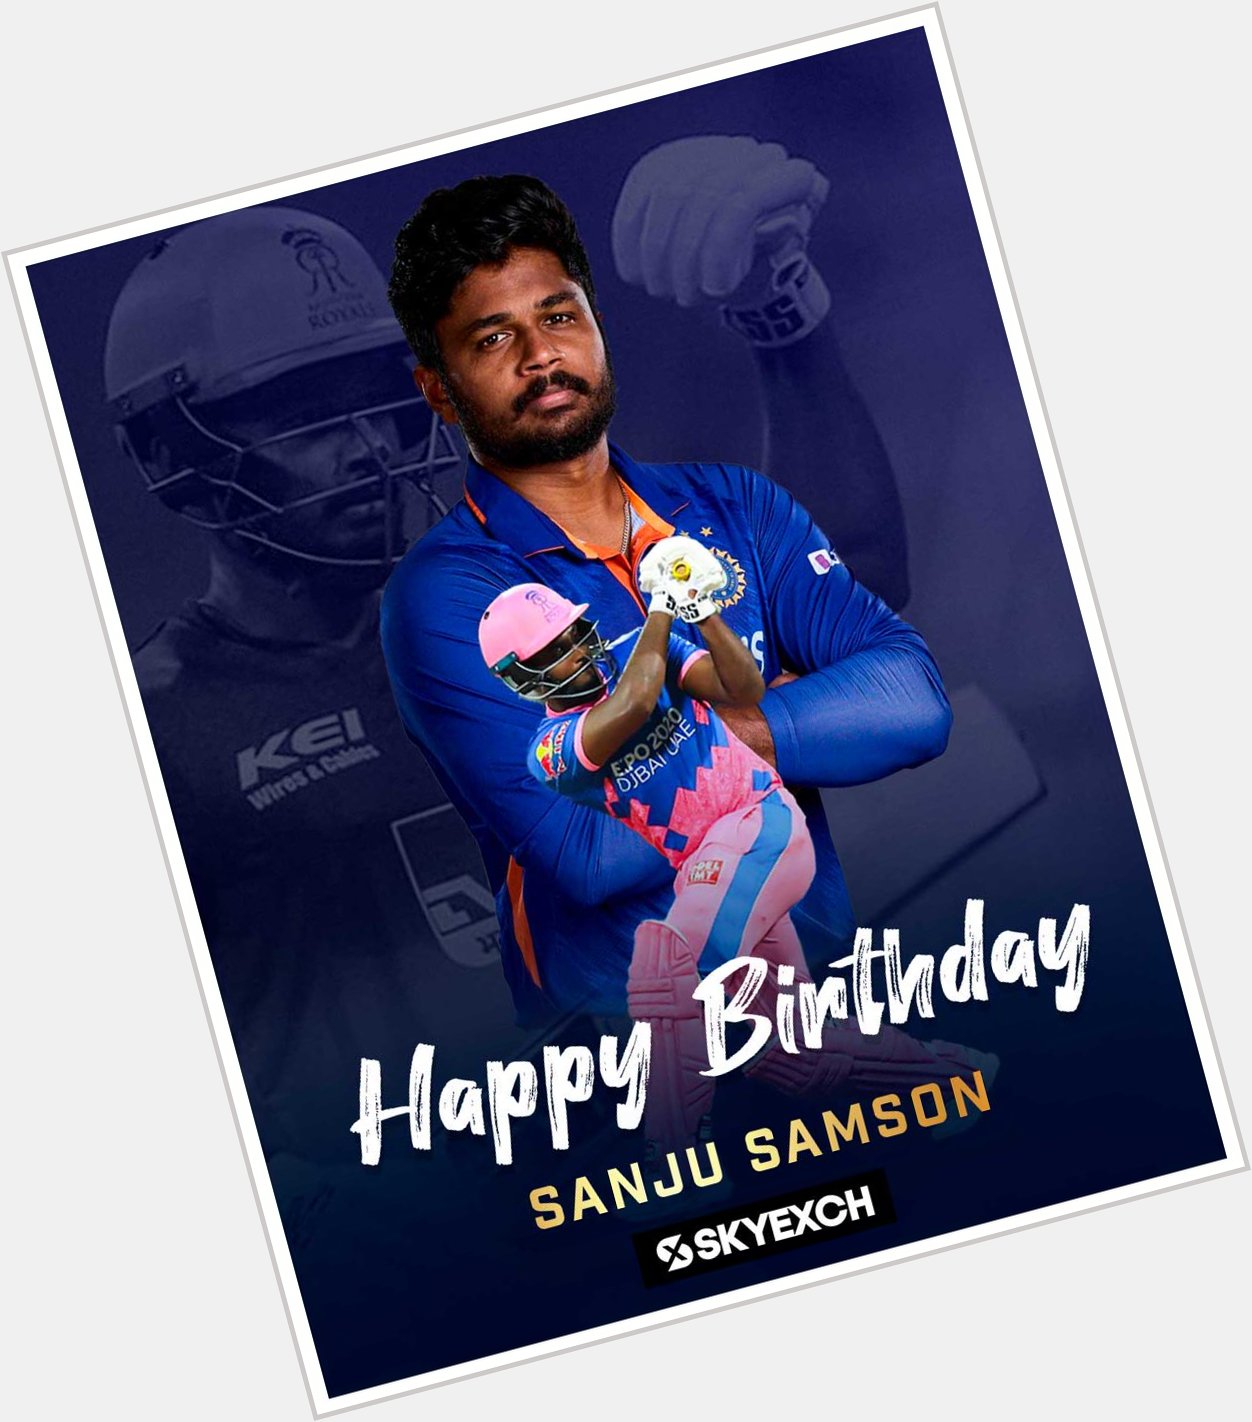 Wishing Sanju Samson a Very Happy Birthday       